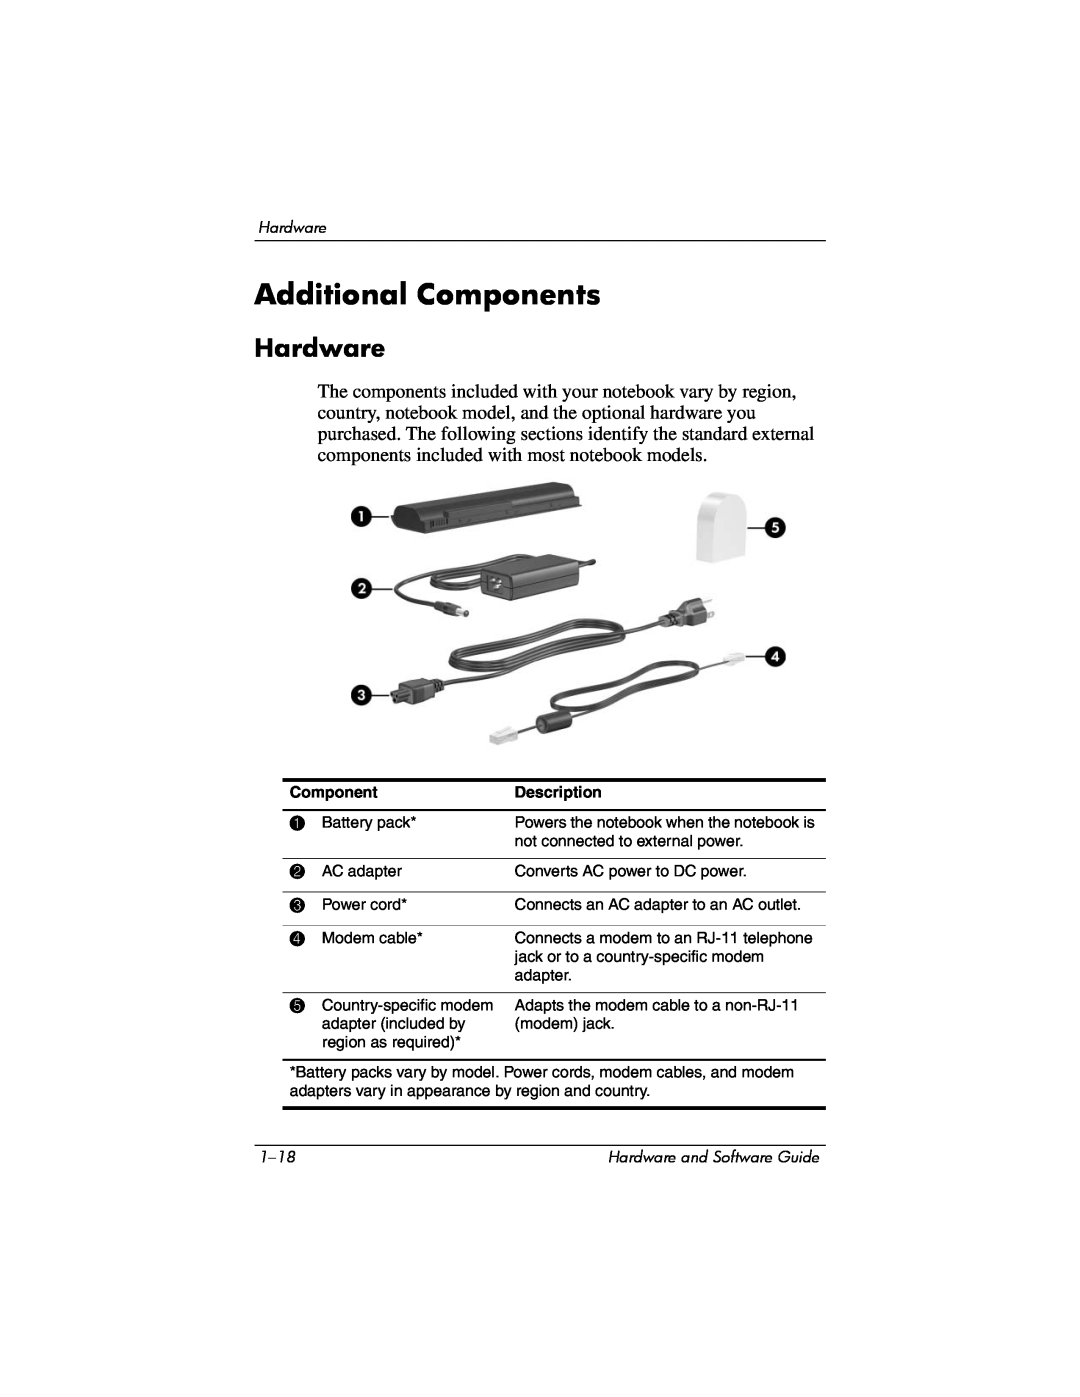 Compaq Presario M2000 manual Additional Components, Hardware, Description 